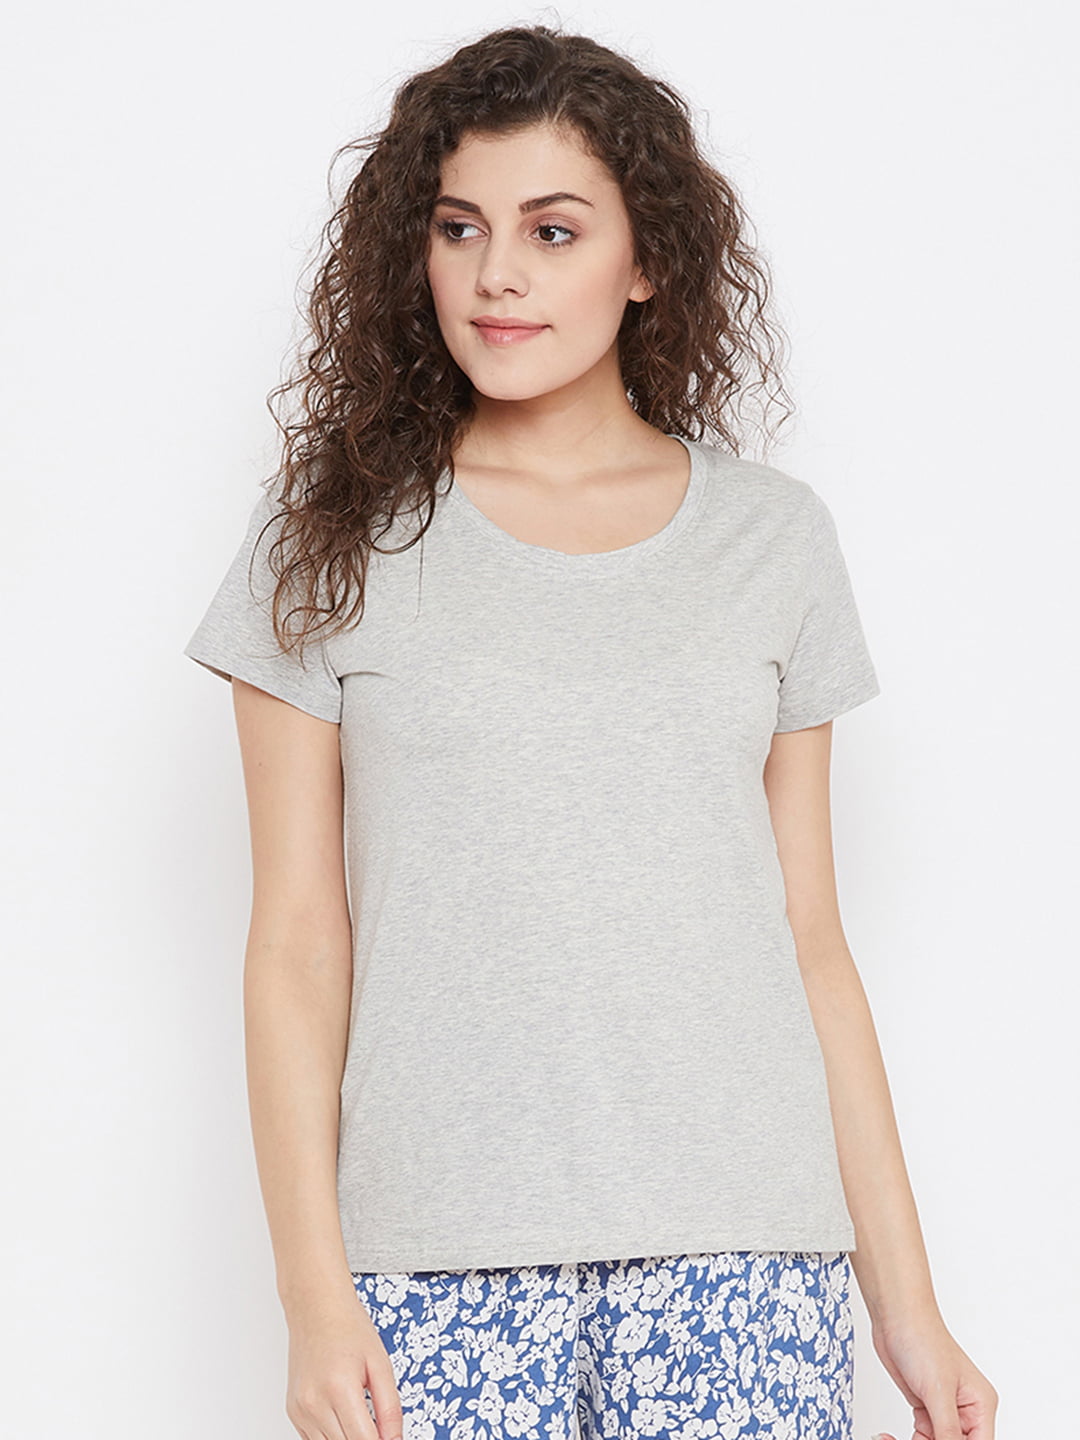 Clovia Solid Sleep T-Shirt in Light Grey - Cotton Rich 